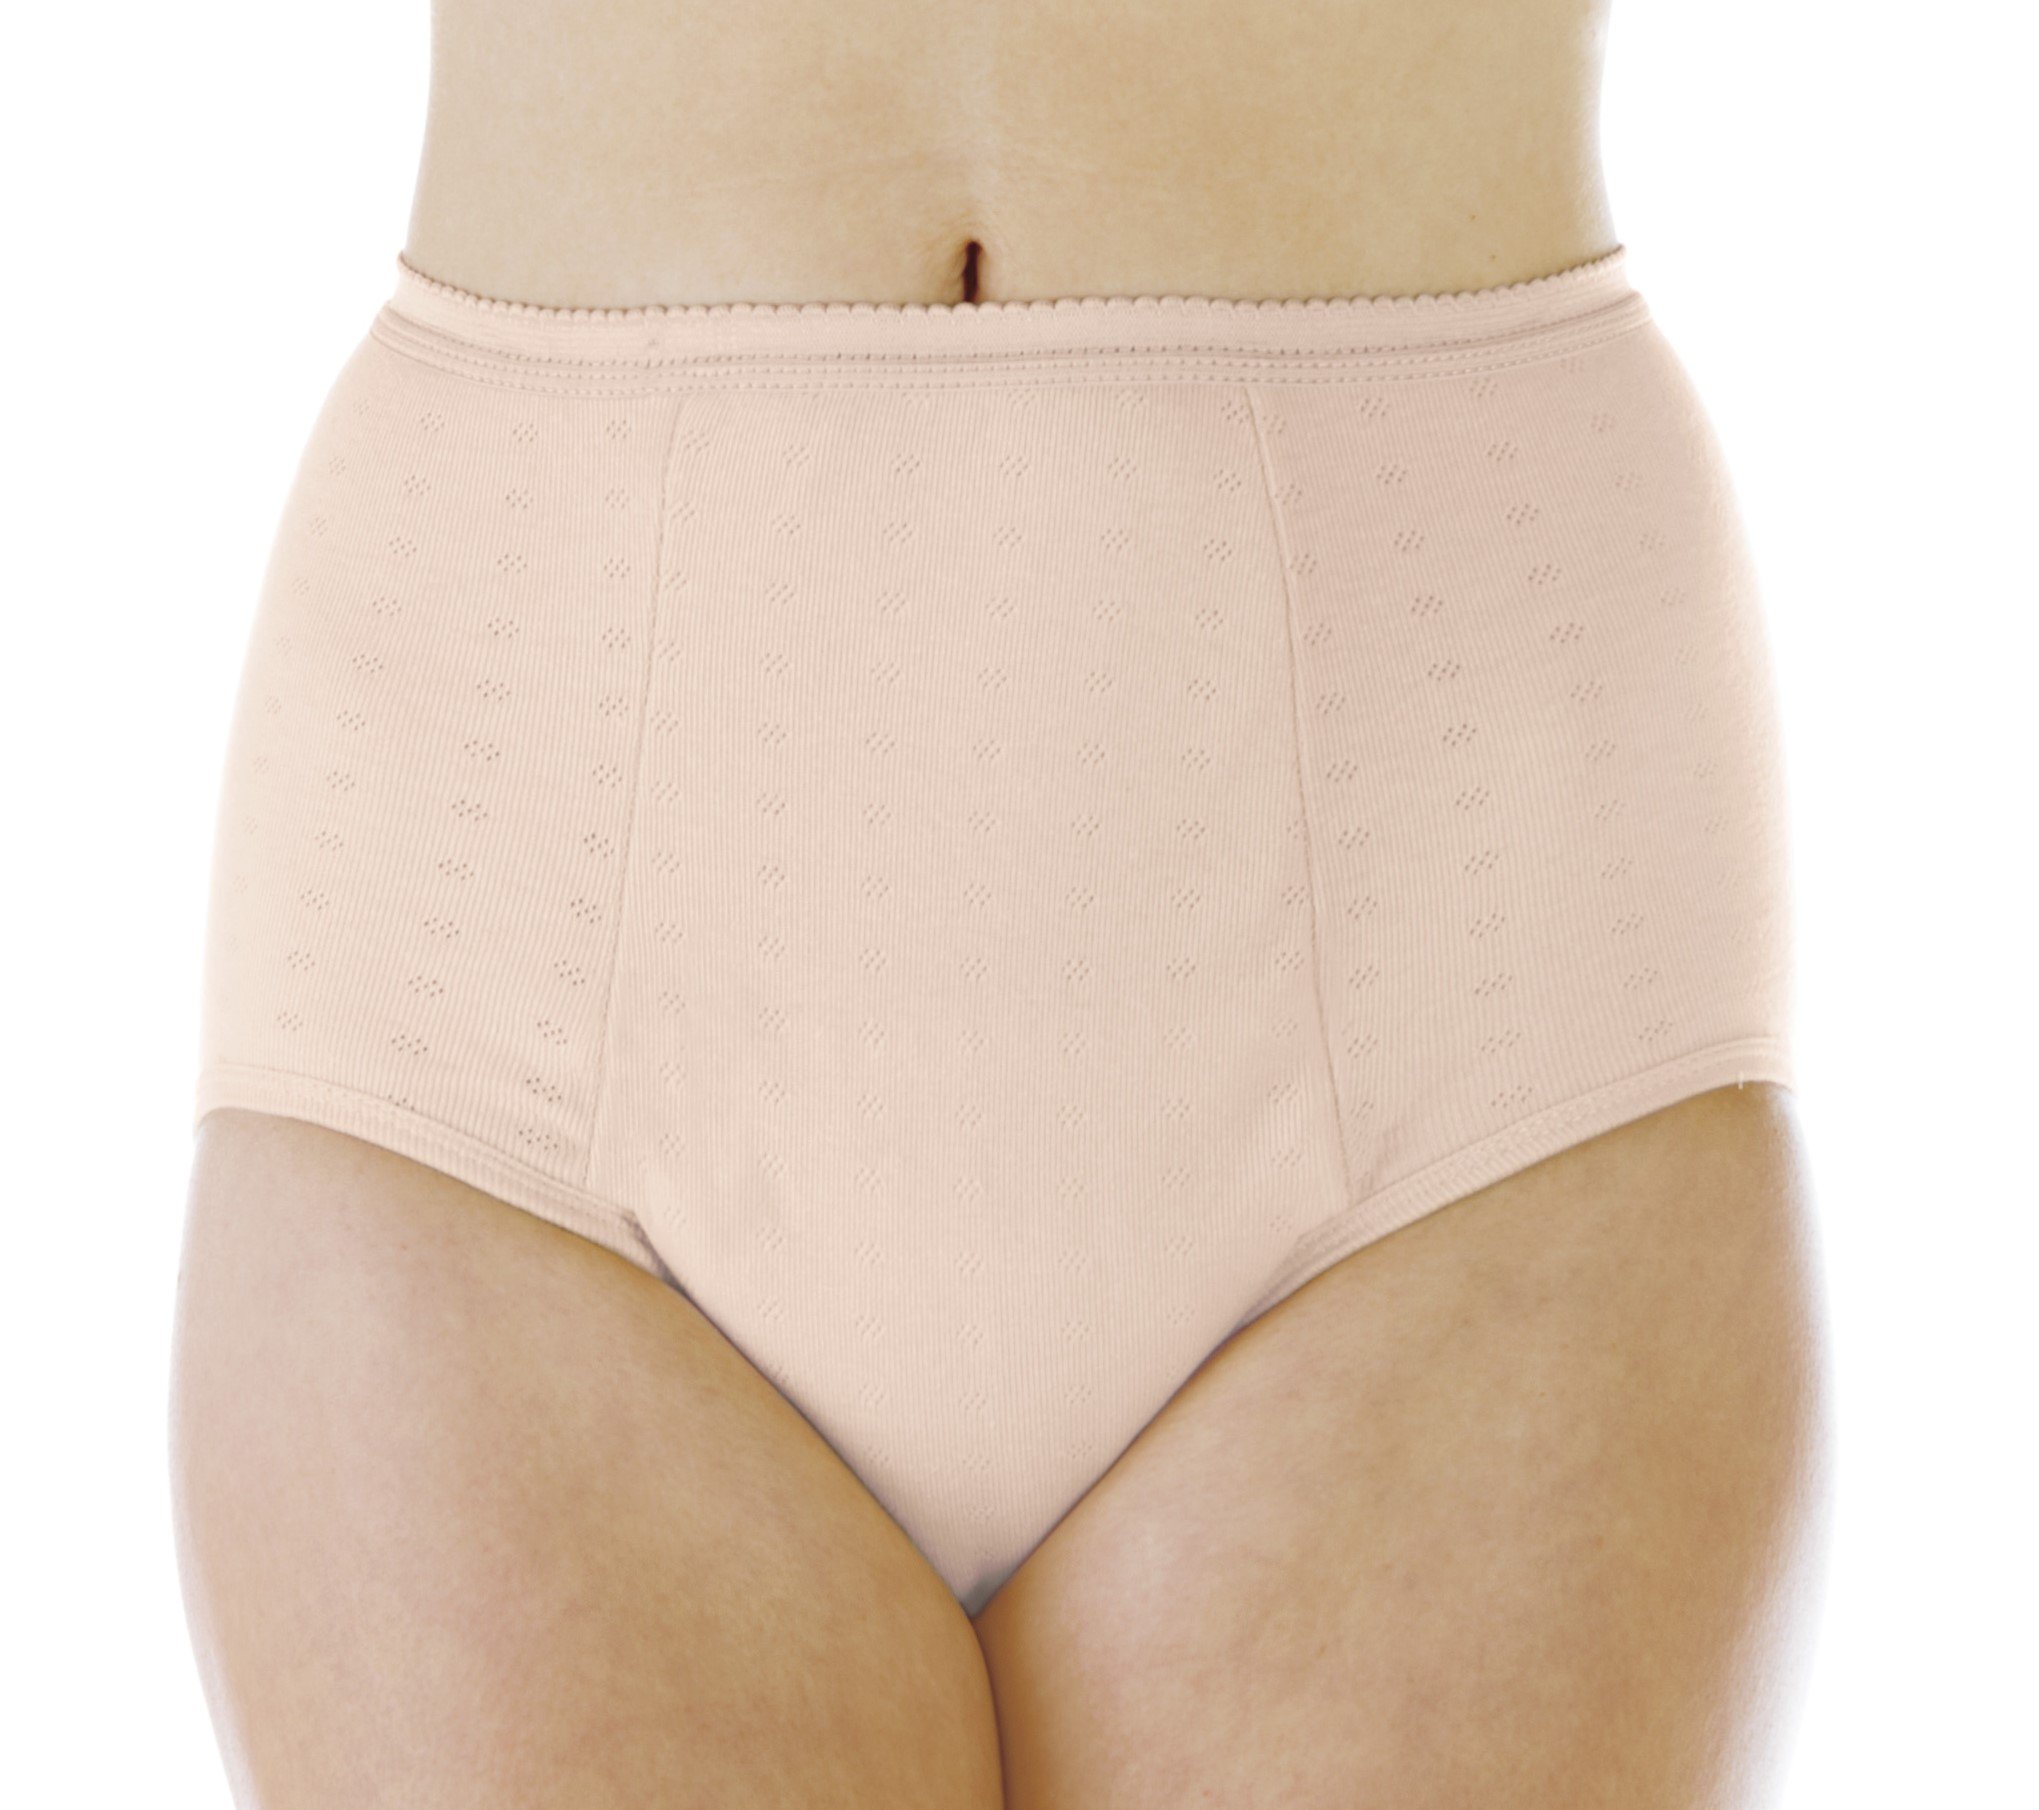  Wearever Women's Cotton Comfort Incontinence Panties